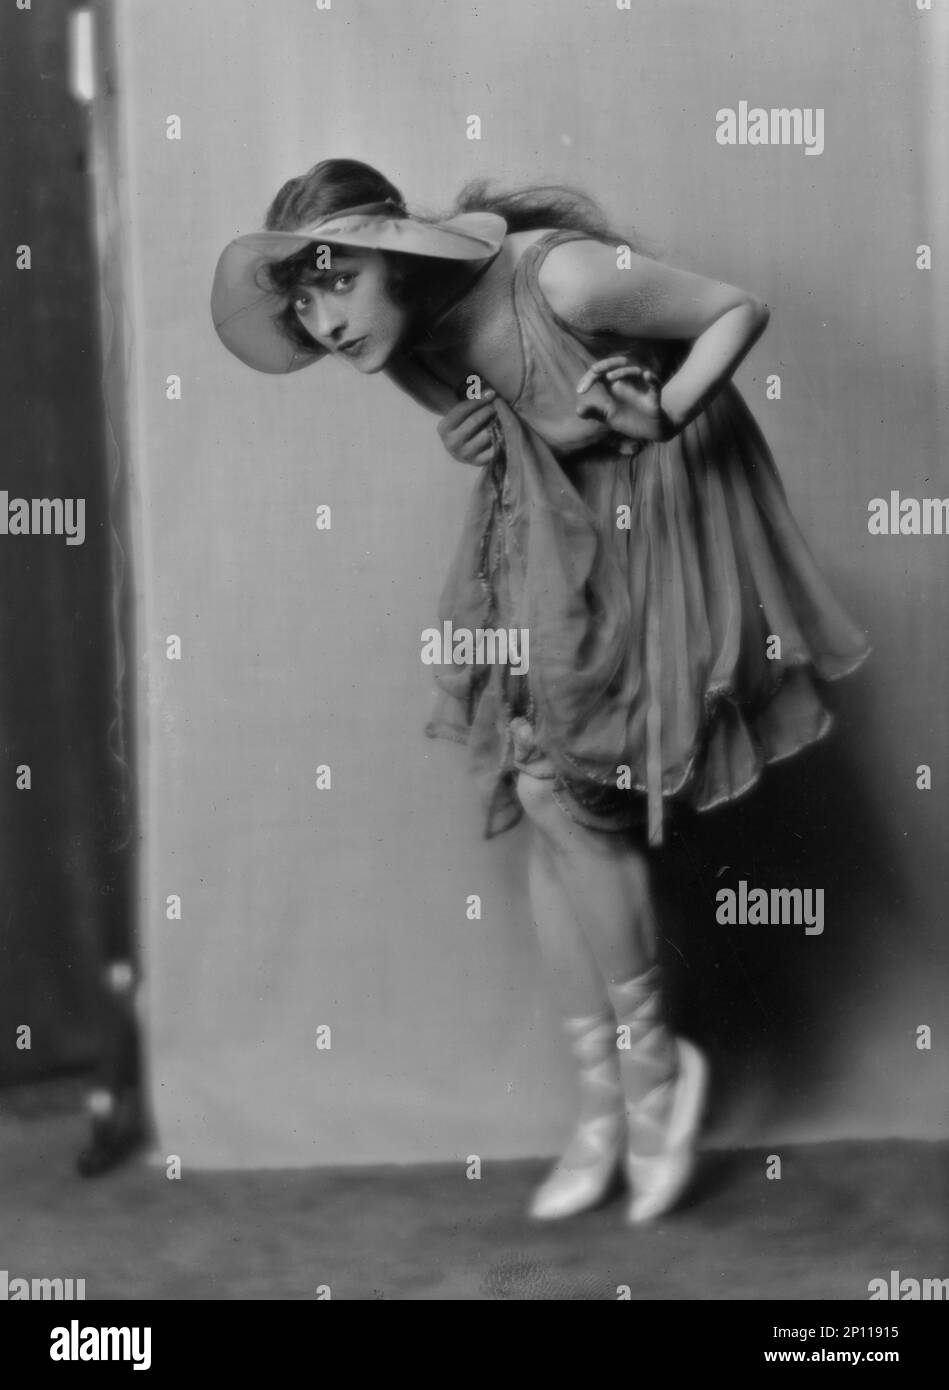 Dolly sister, portrait photograph, 1916 Stock Photo - Alamy